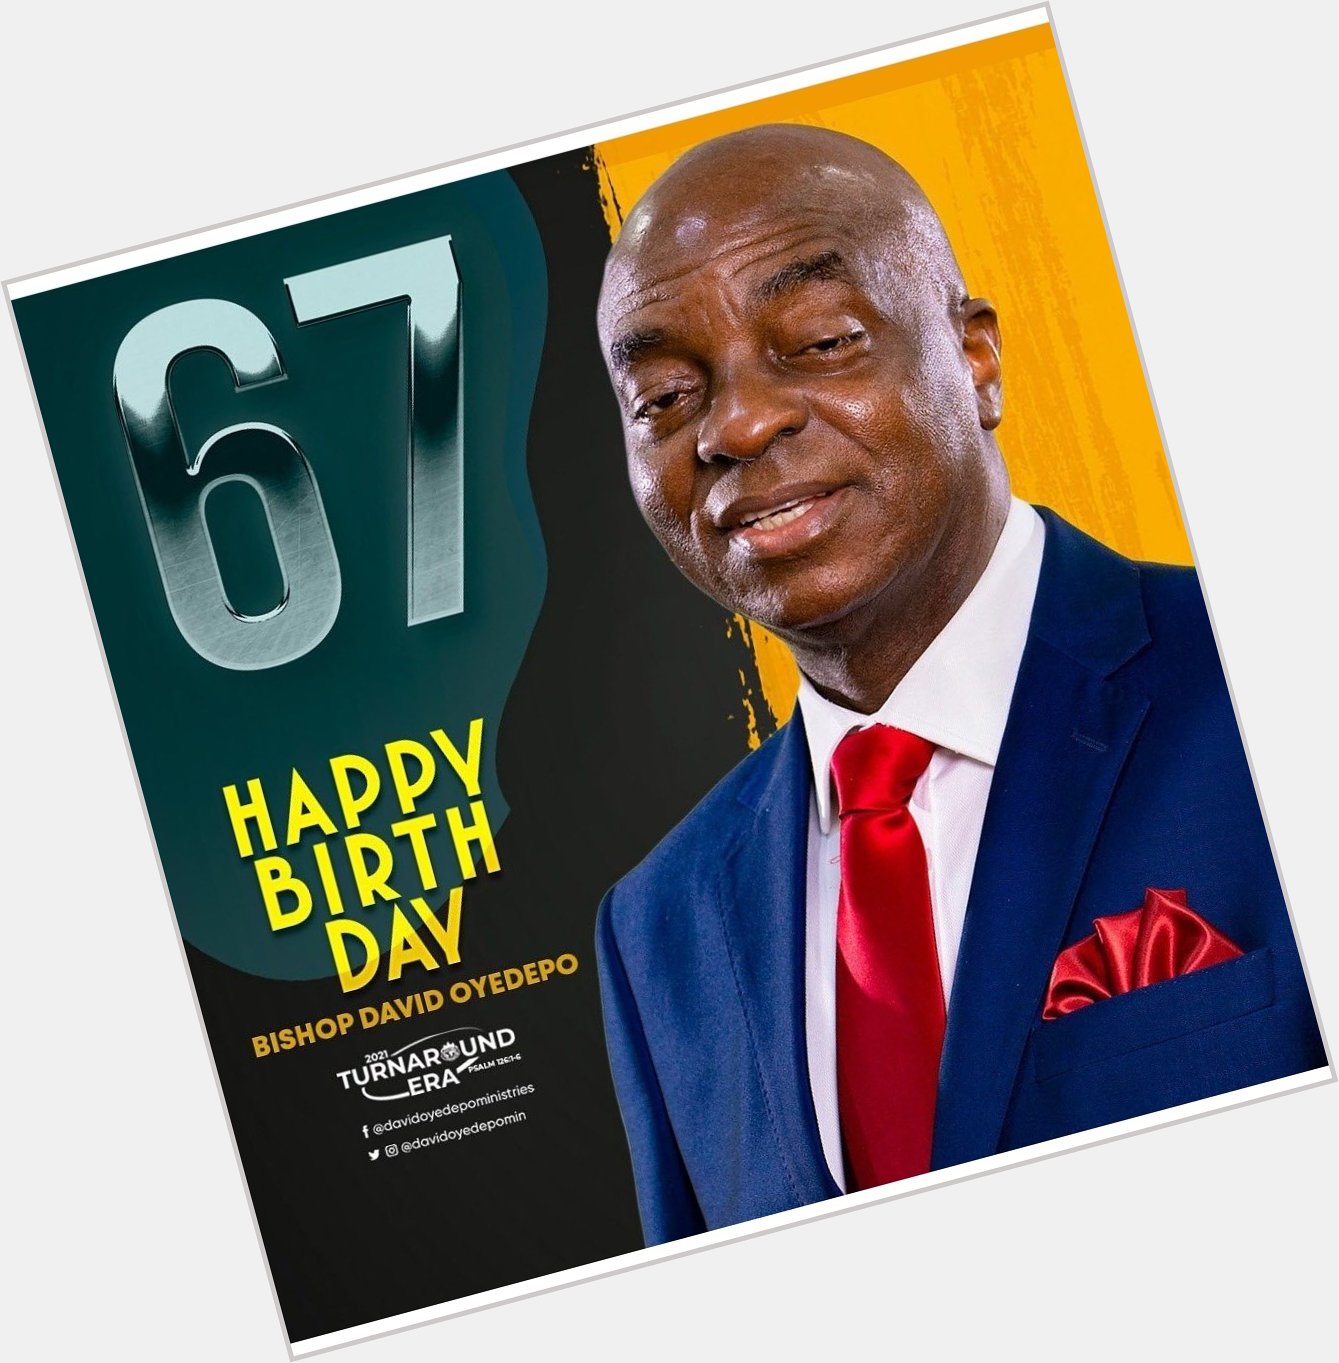 Happy birthday Bishop David Oyedepo.
We celebrate and love you sir. 